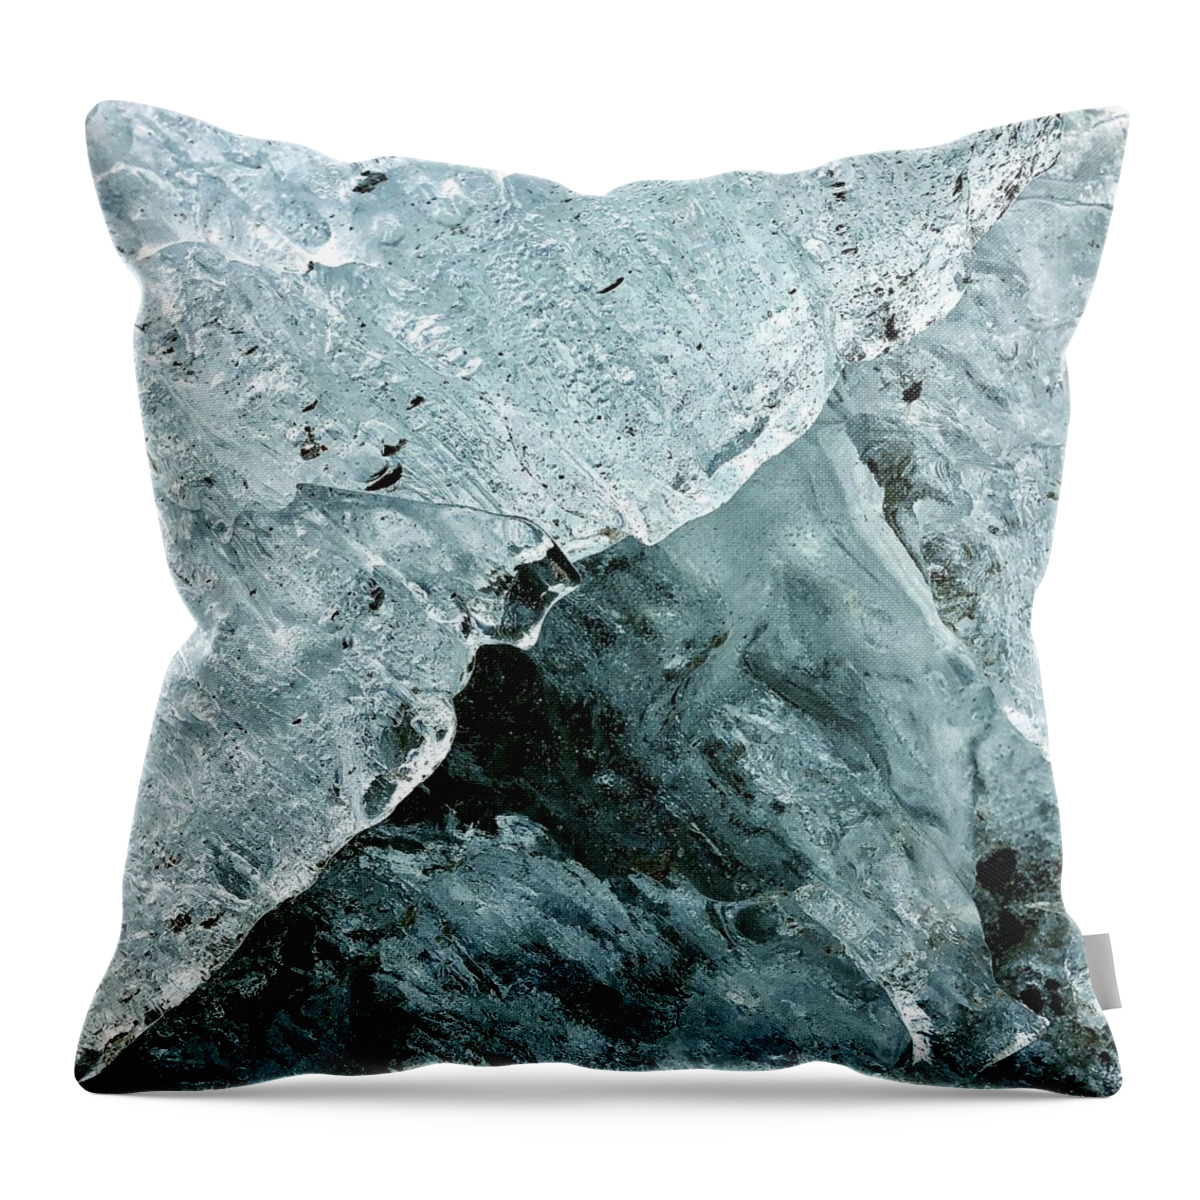 Winter Throw Pillow featuring the photograph Frozen Cube by Anna Ruzsan